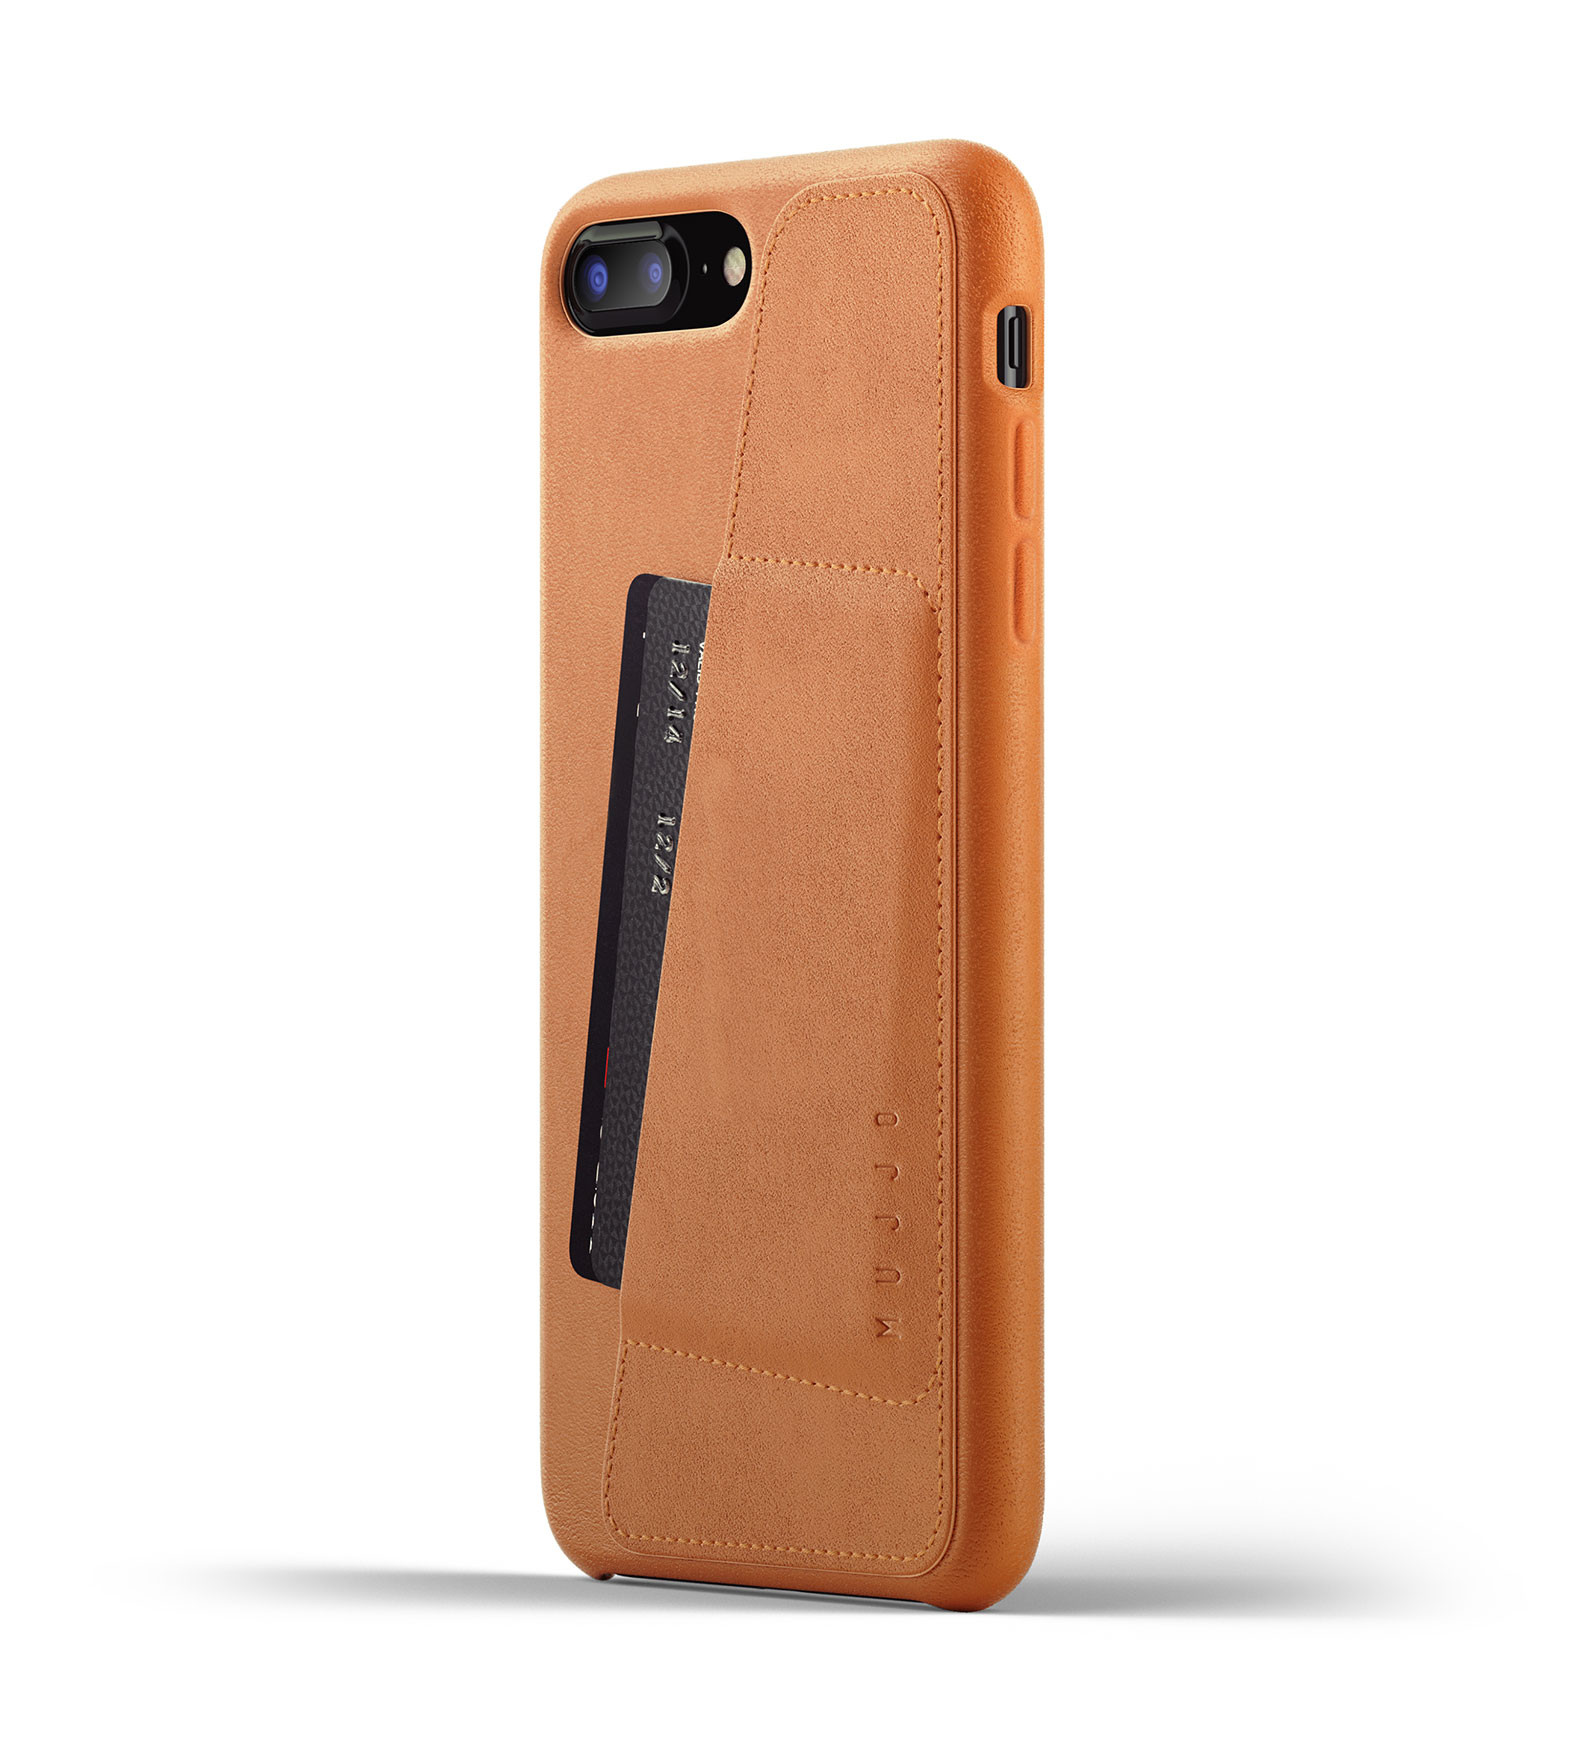 Mujjo Leather Wallet Case iPhone 7 / 8 Plus braun